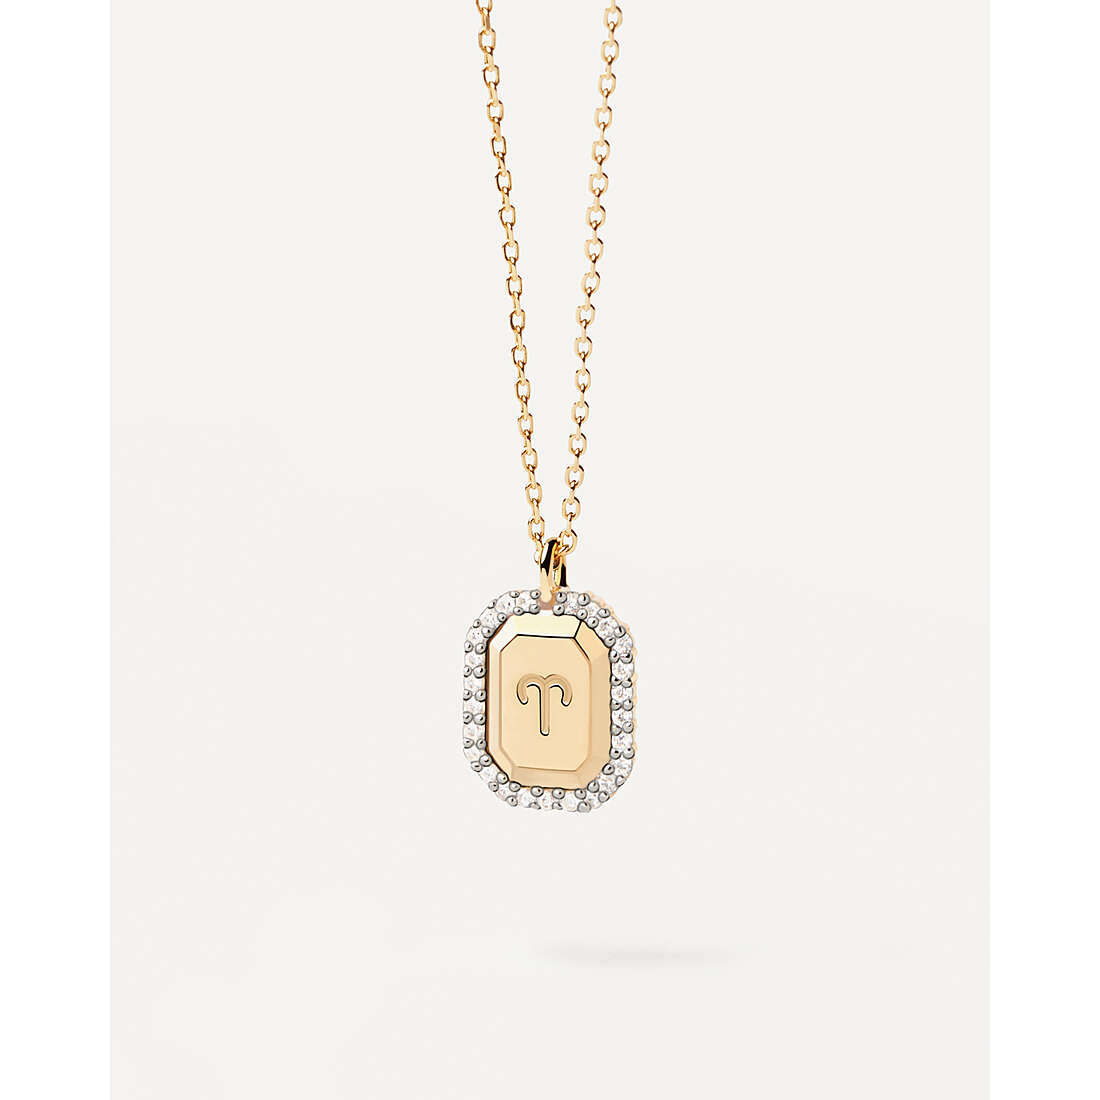 necklace woman zodiac sign Aries PDPaola jewel CO01-568-U